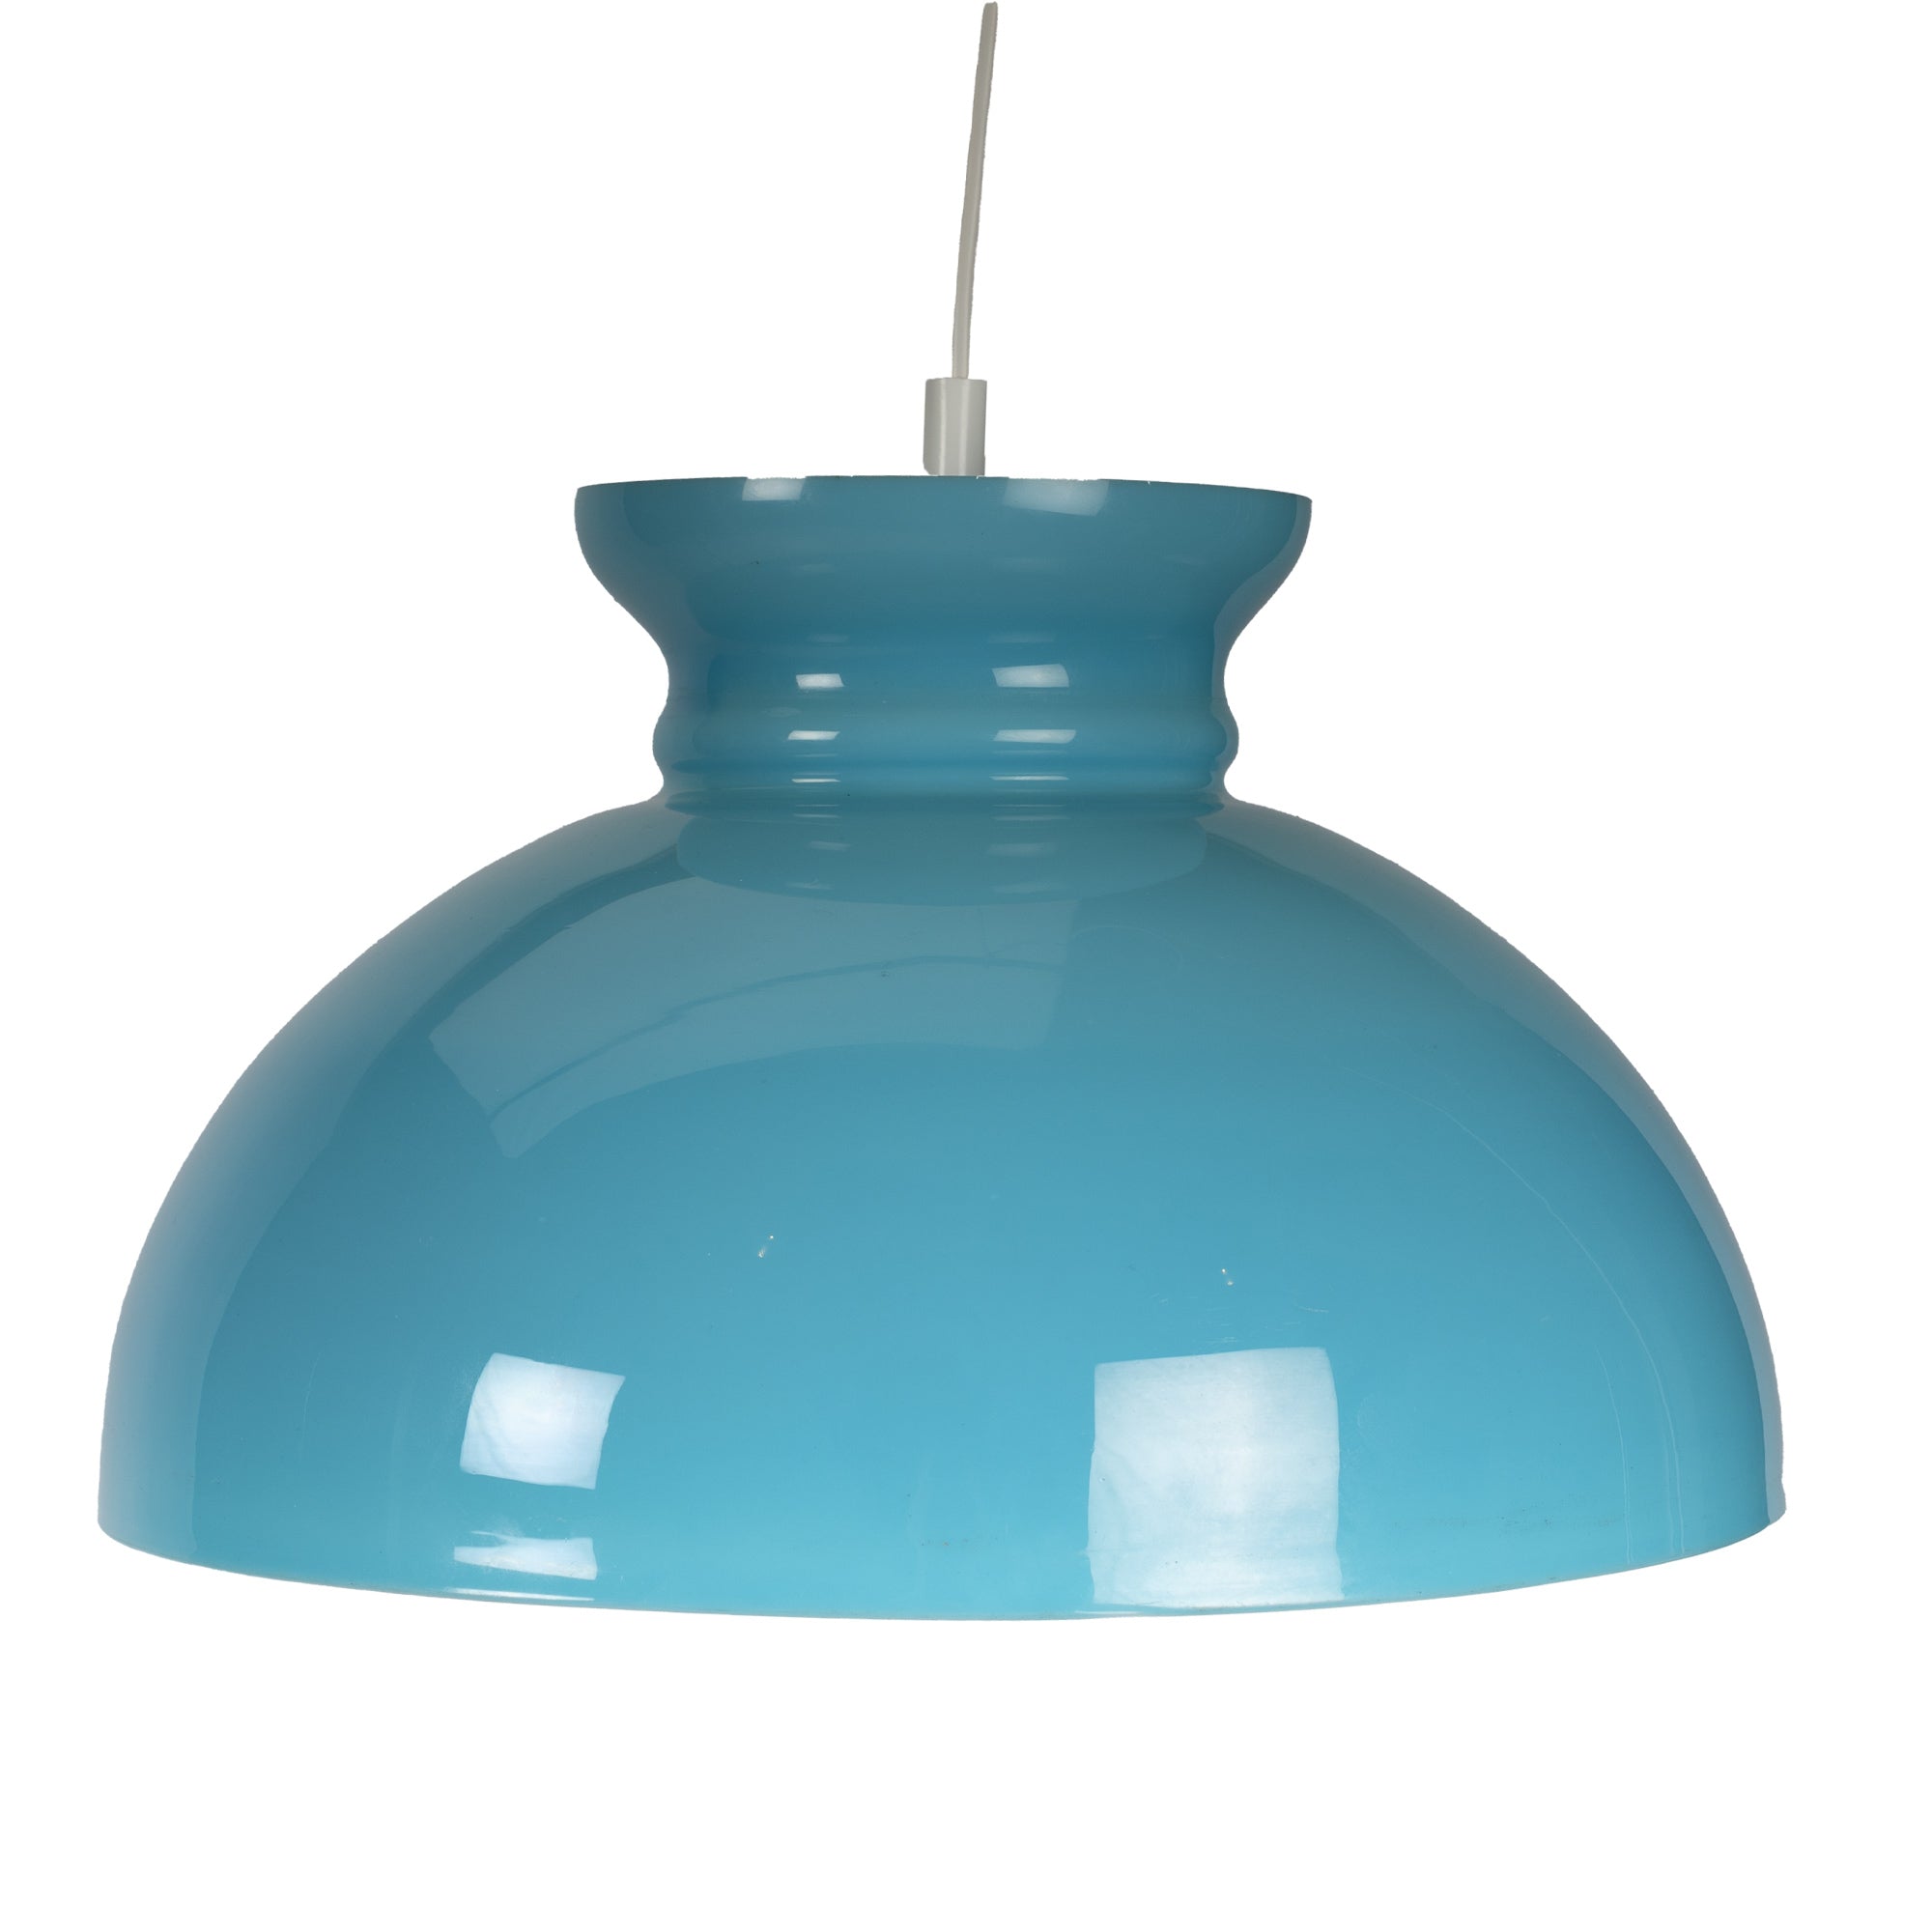 Turquoise Vintage Pendant Lamp